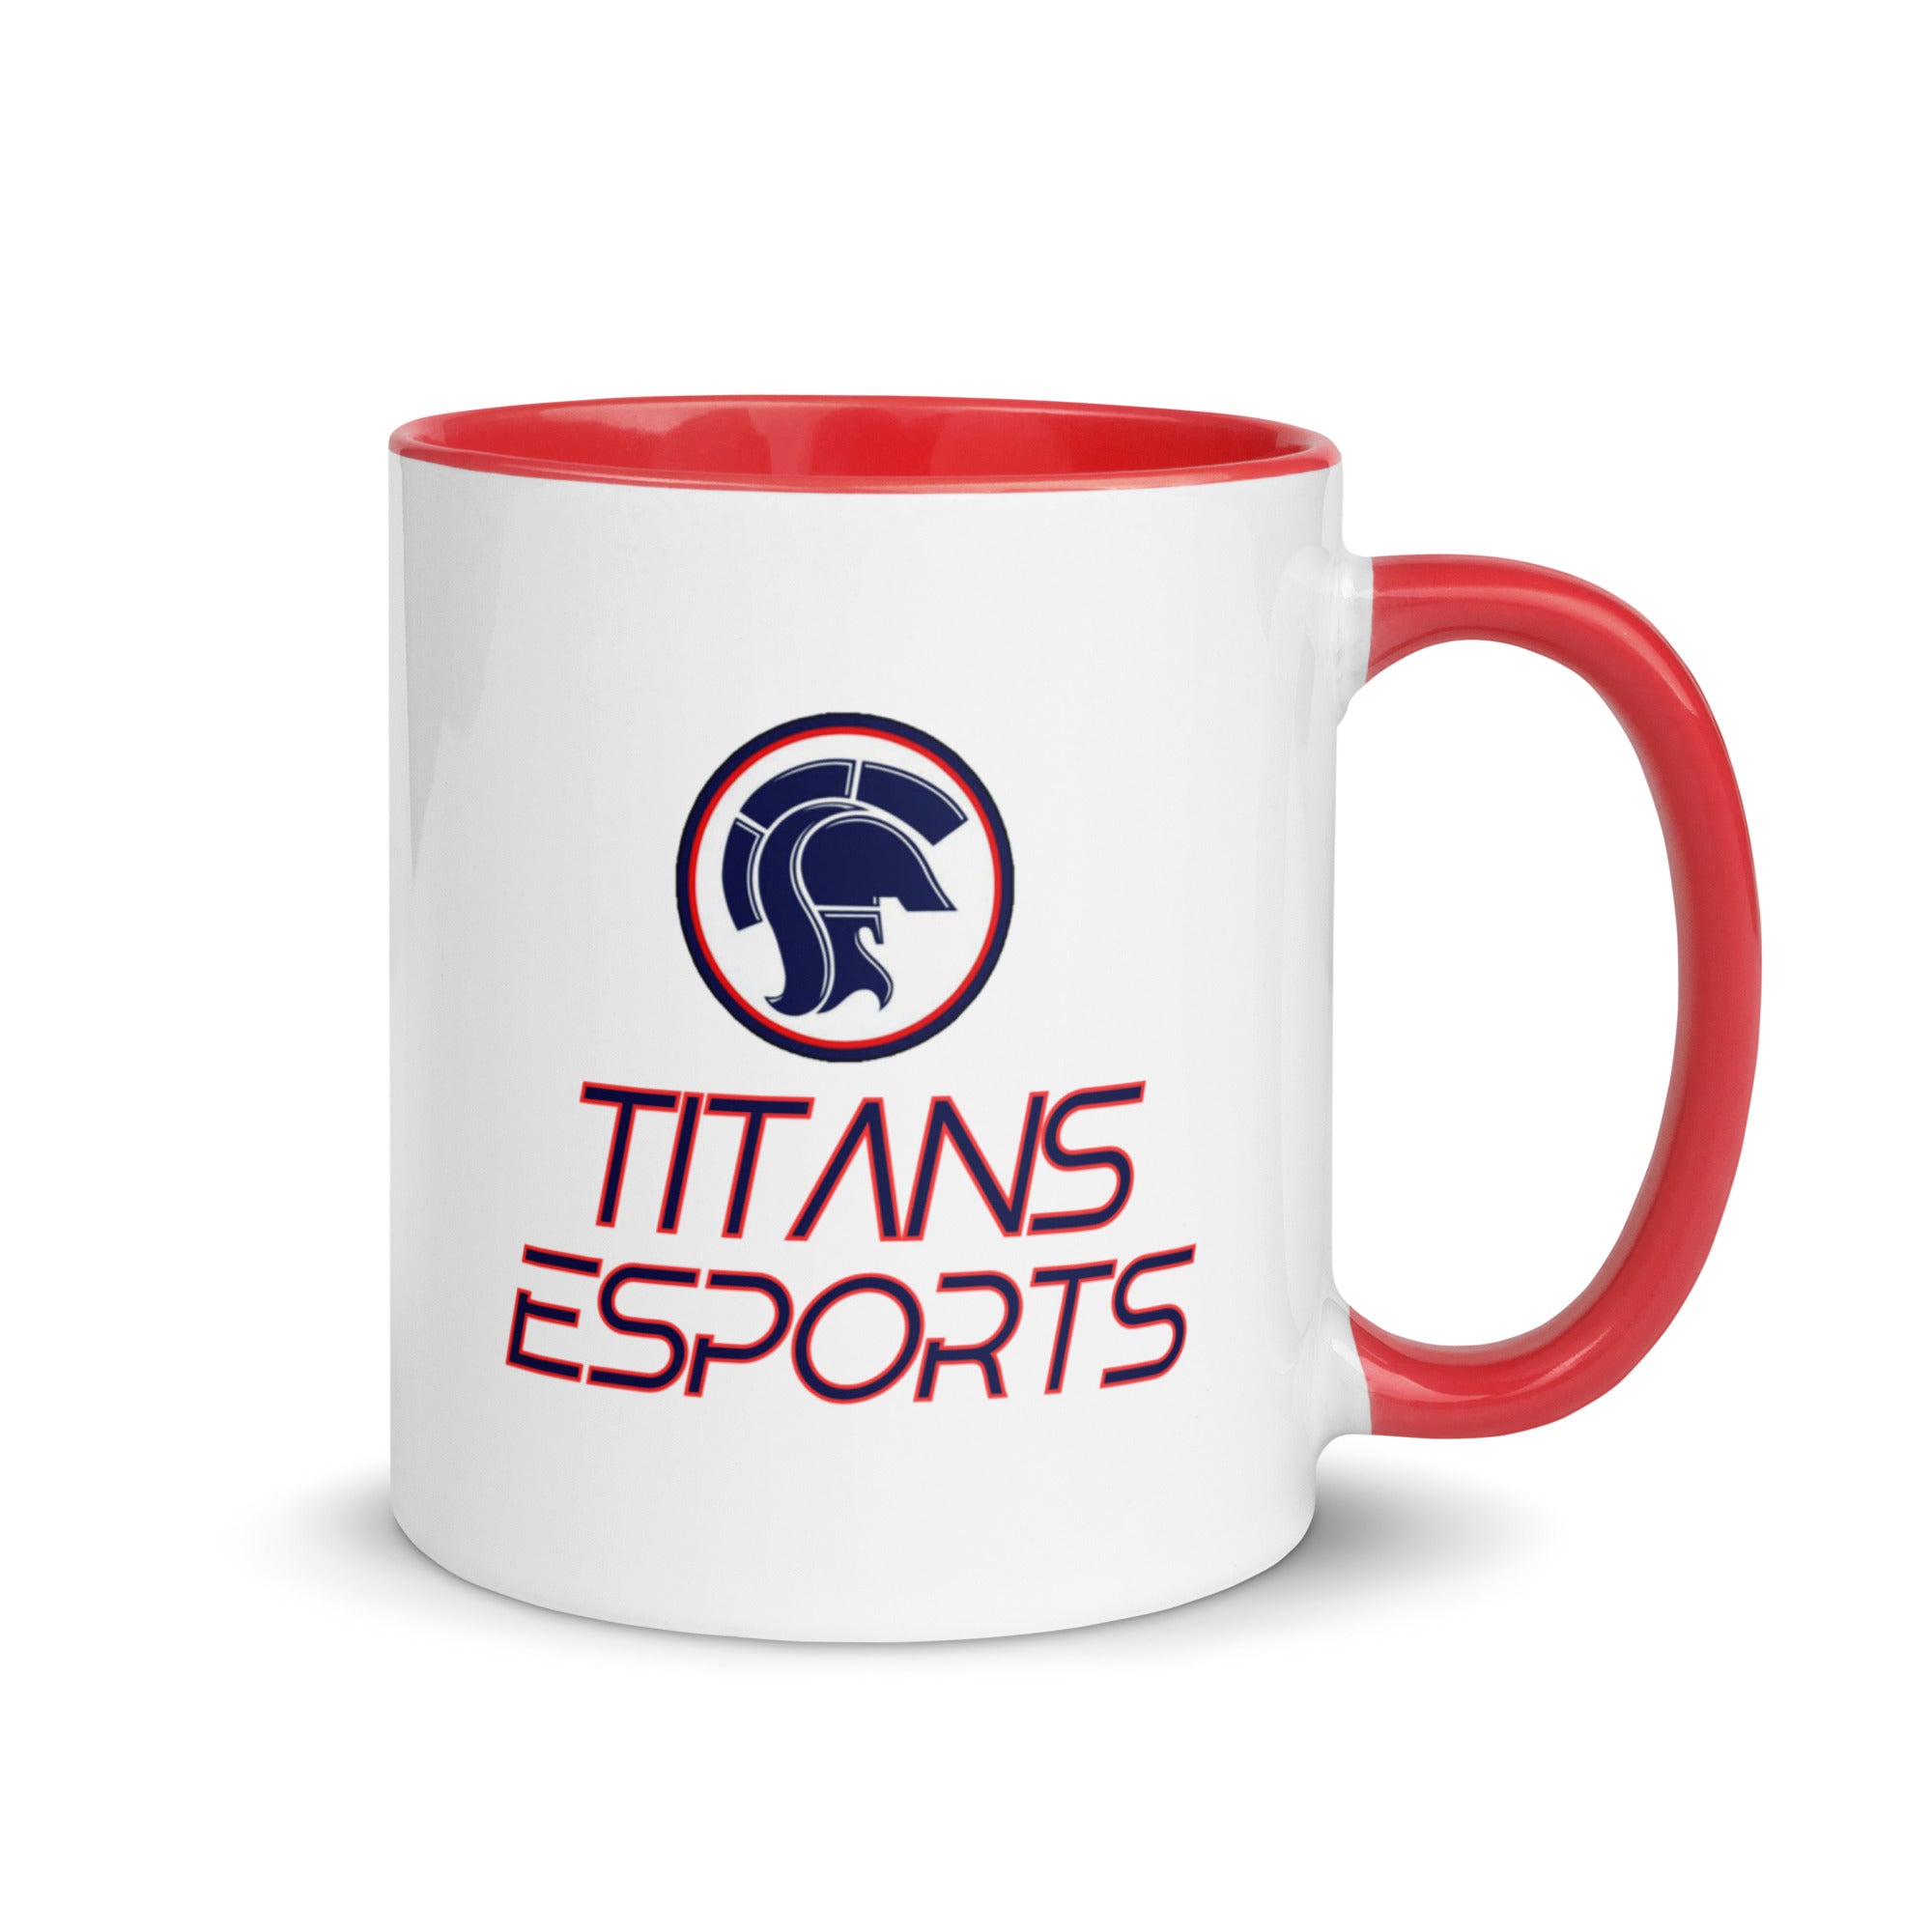 Titans Esports Coffee Mug